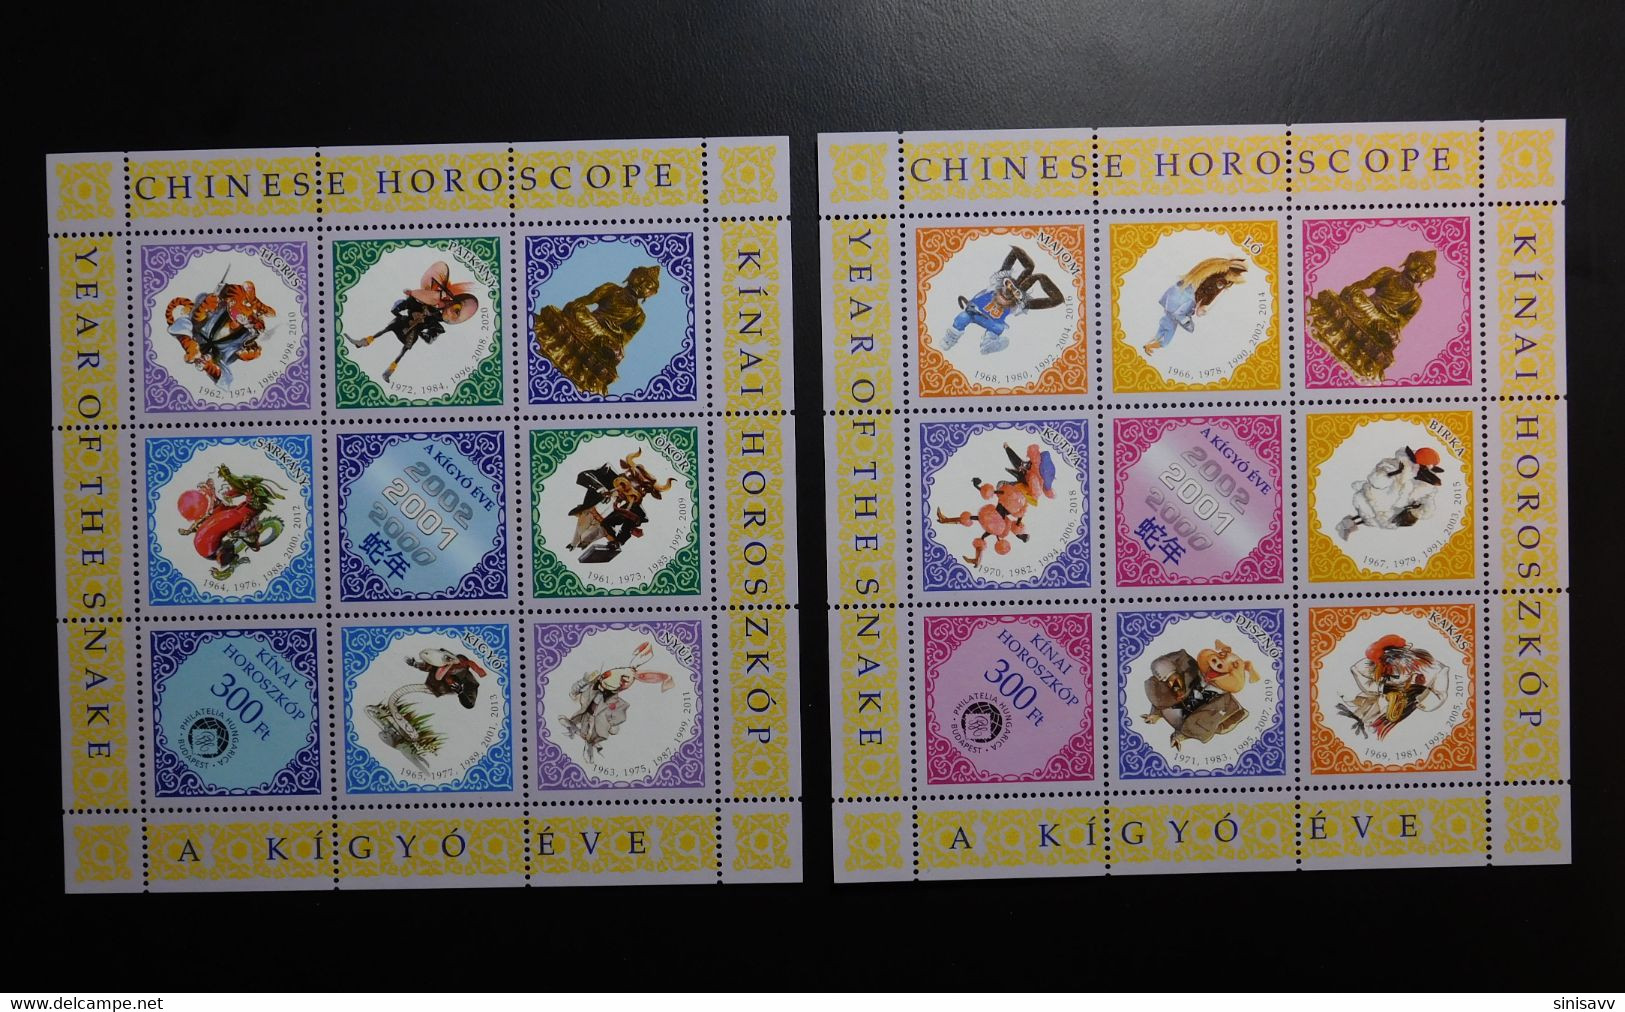 HUNGARY - 2001 - Commemorative Sheet Pair - Chinese Horoscope / Year Of The Snake 2001 MNH! - Souvenirbögen